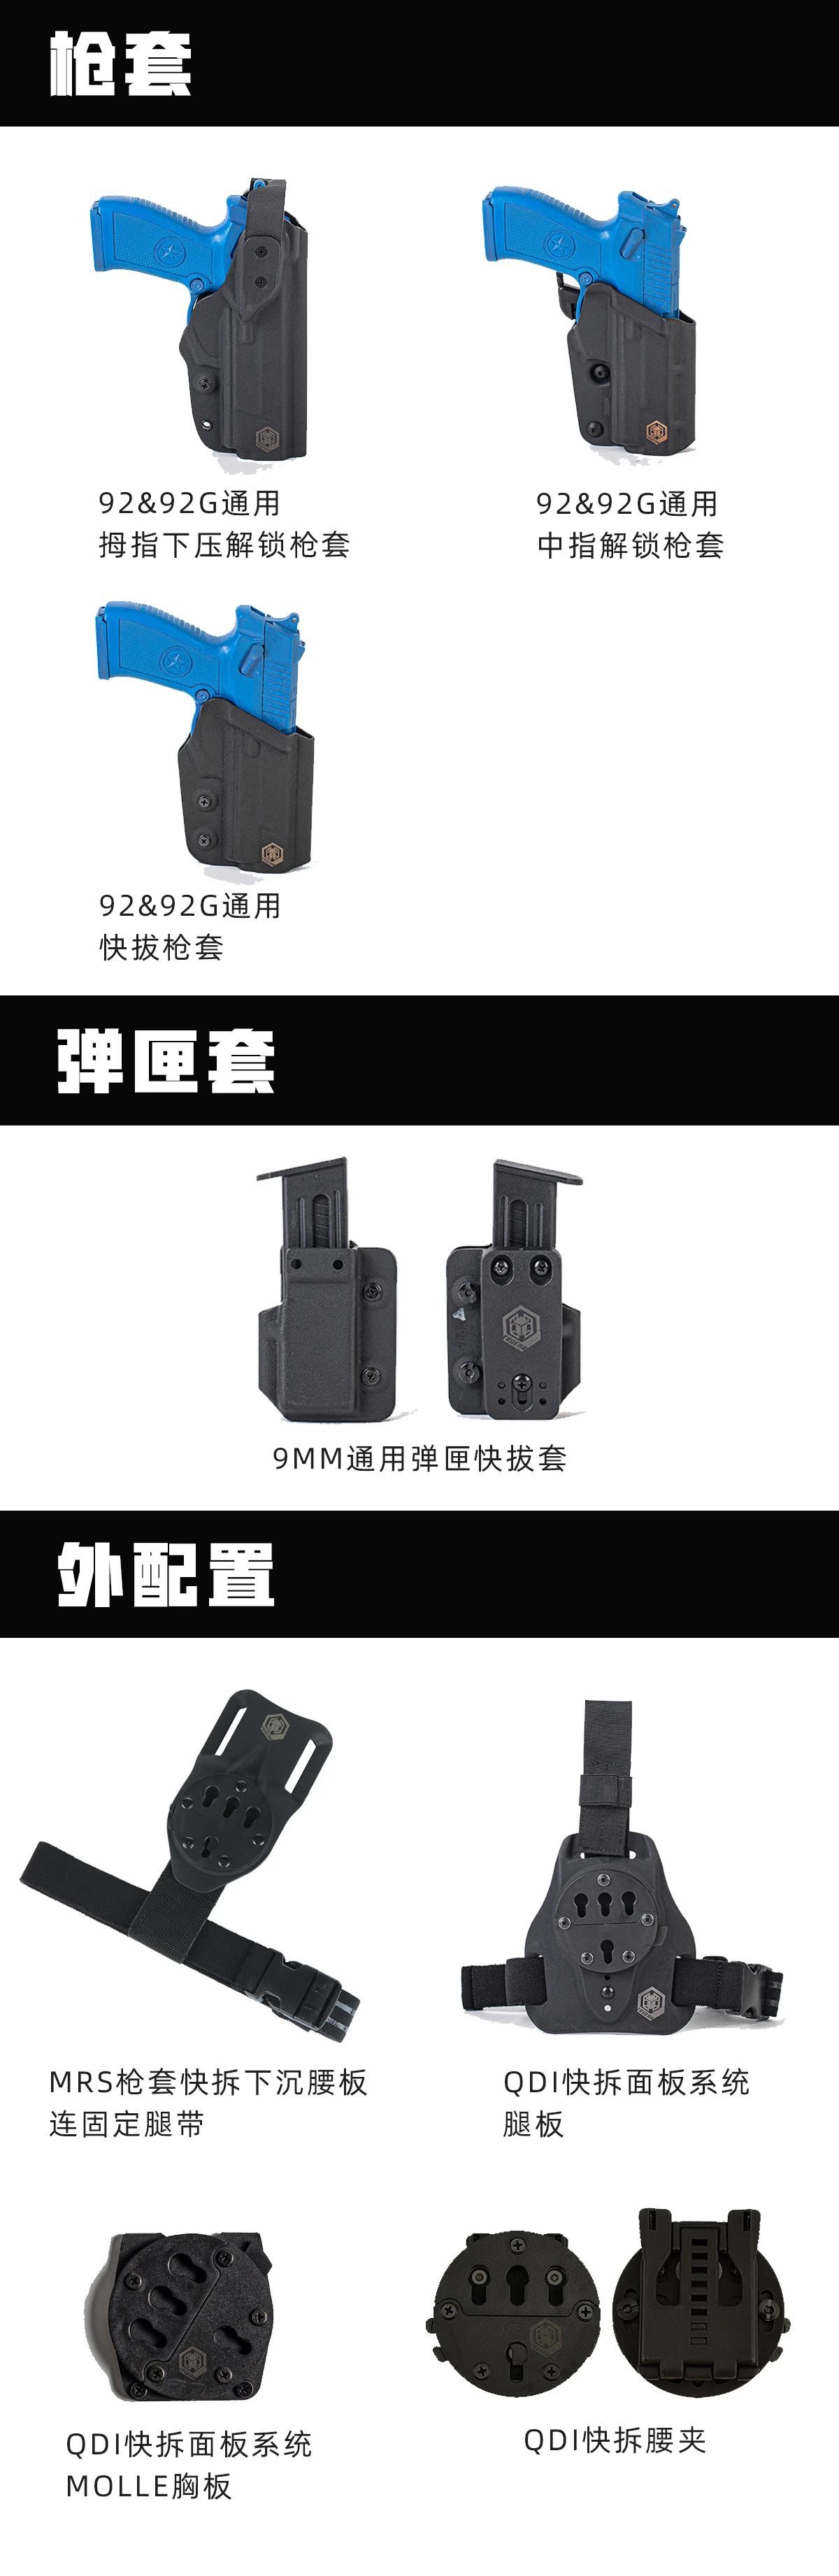 KYDEX系列 | IDPA李怀义教官测评钛敌科枪套！(组图)